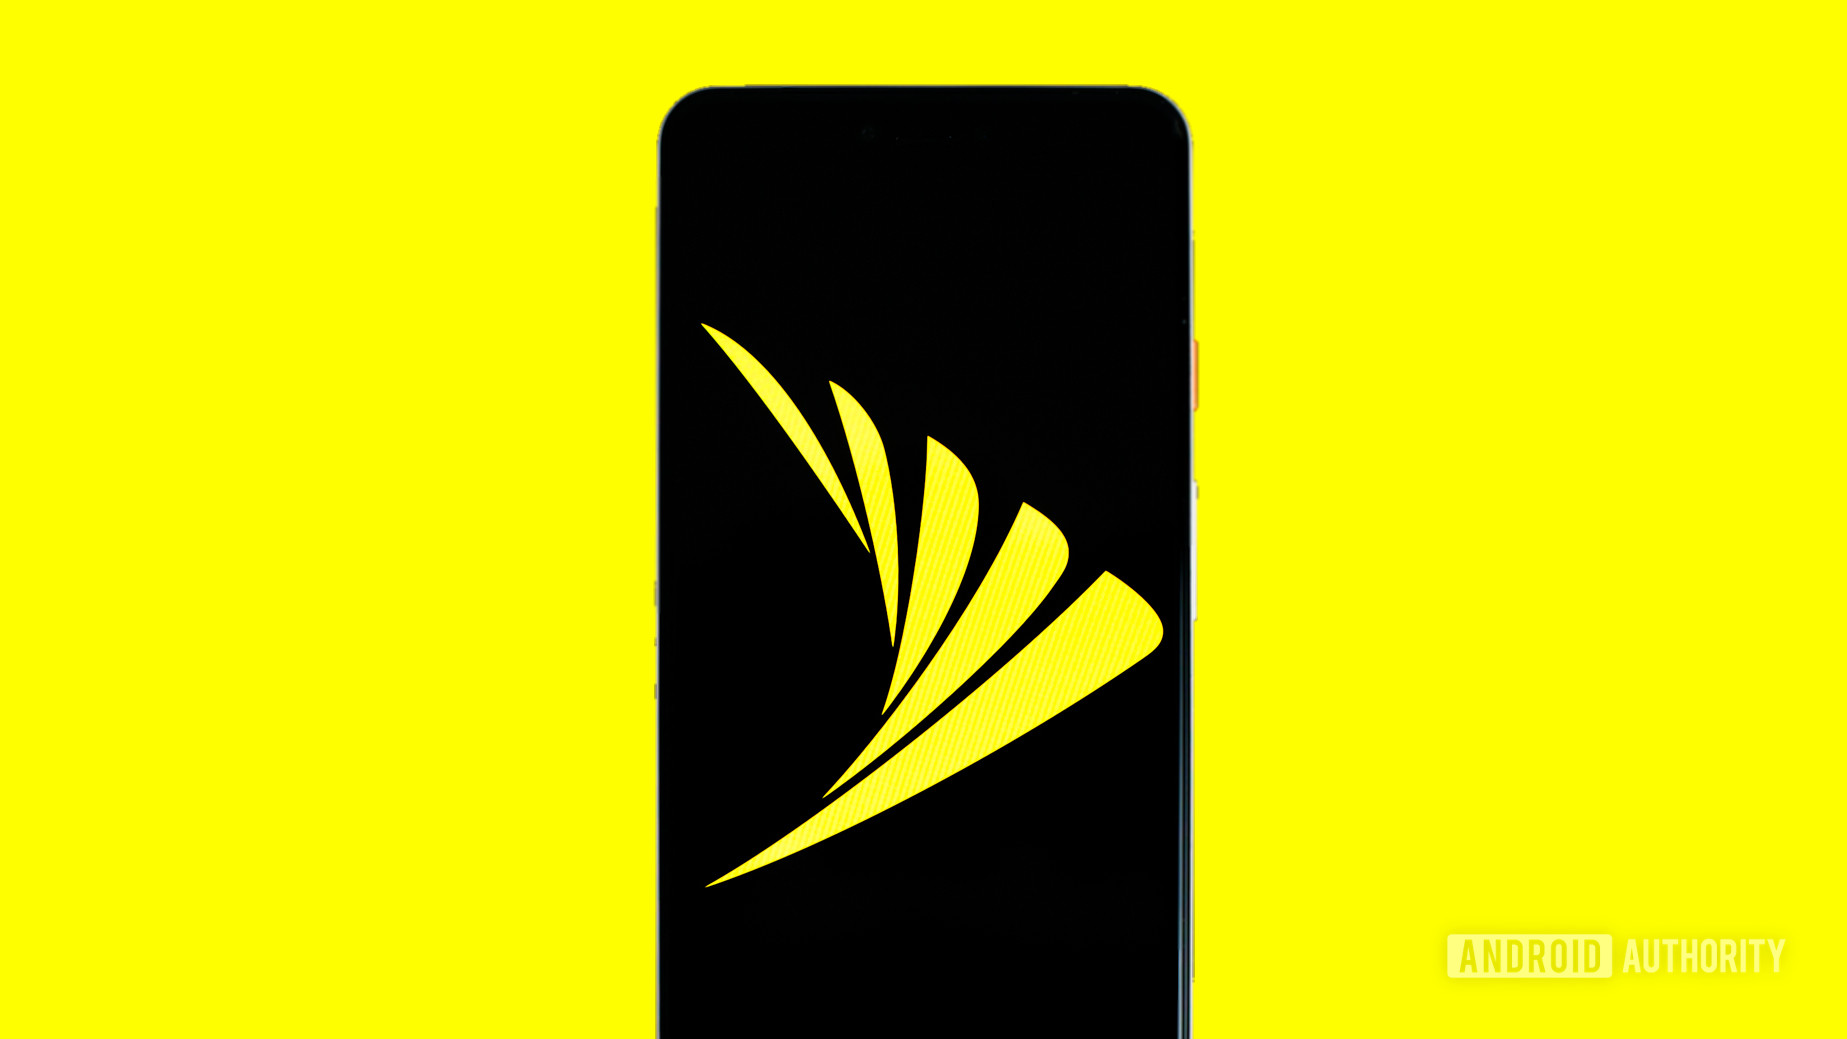 Sprint logo on phone stock photo